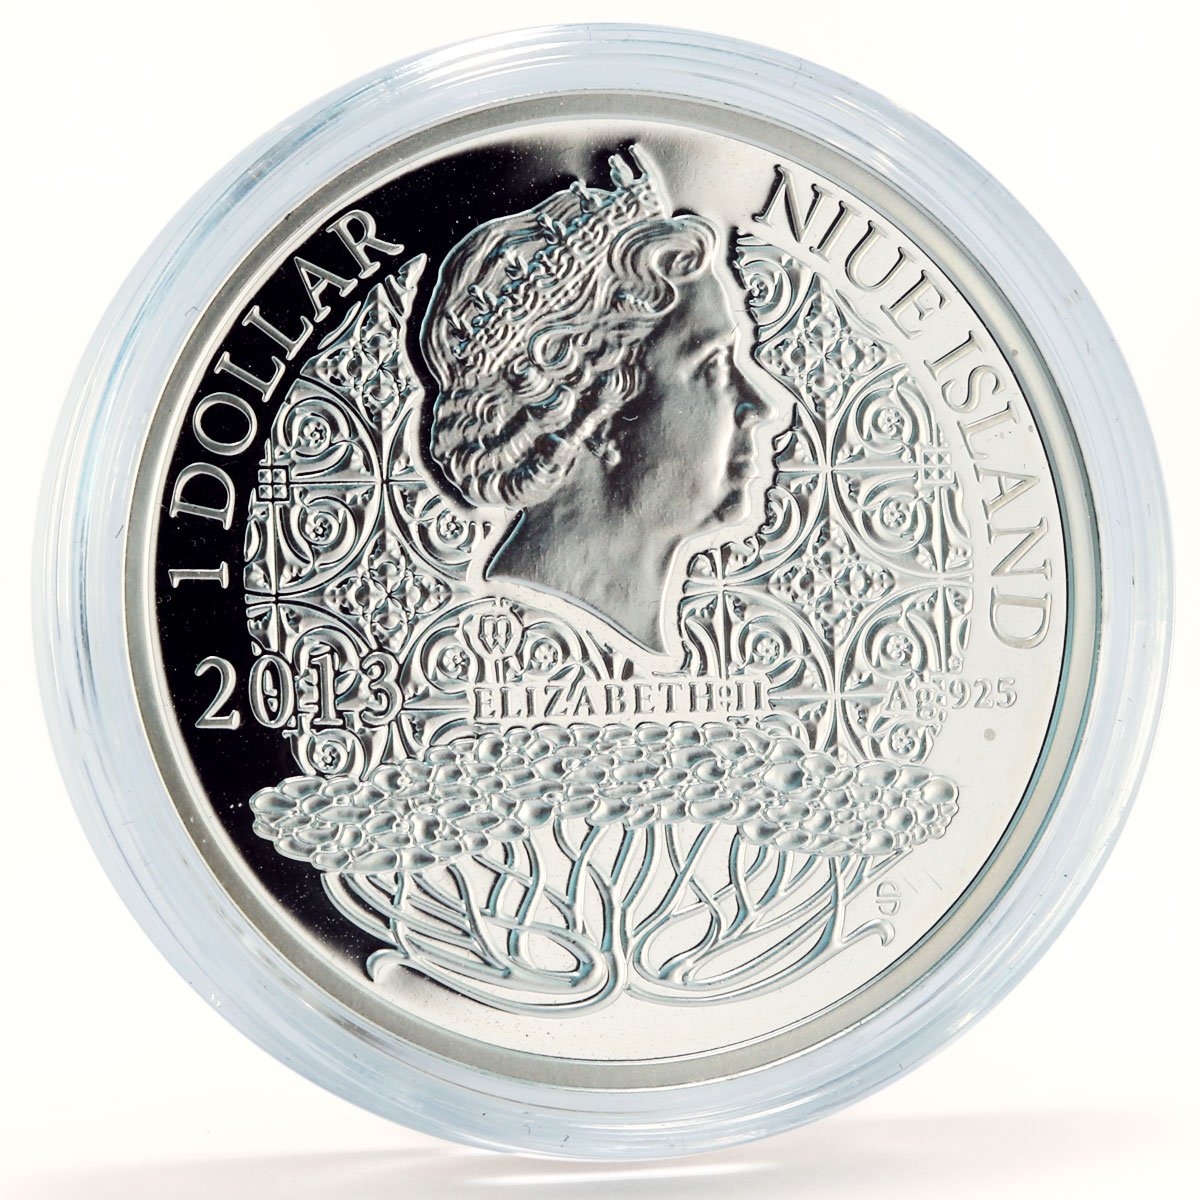 Niue 1 dollar Magic Calendar of Happines September proof silver coin 2013